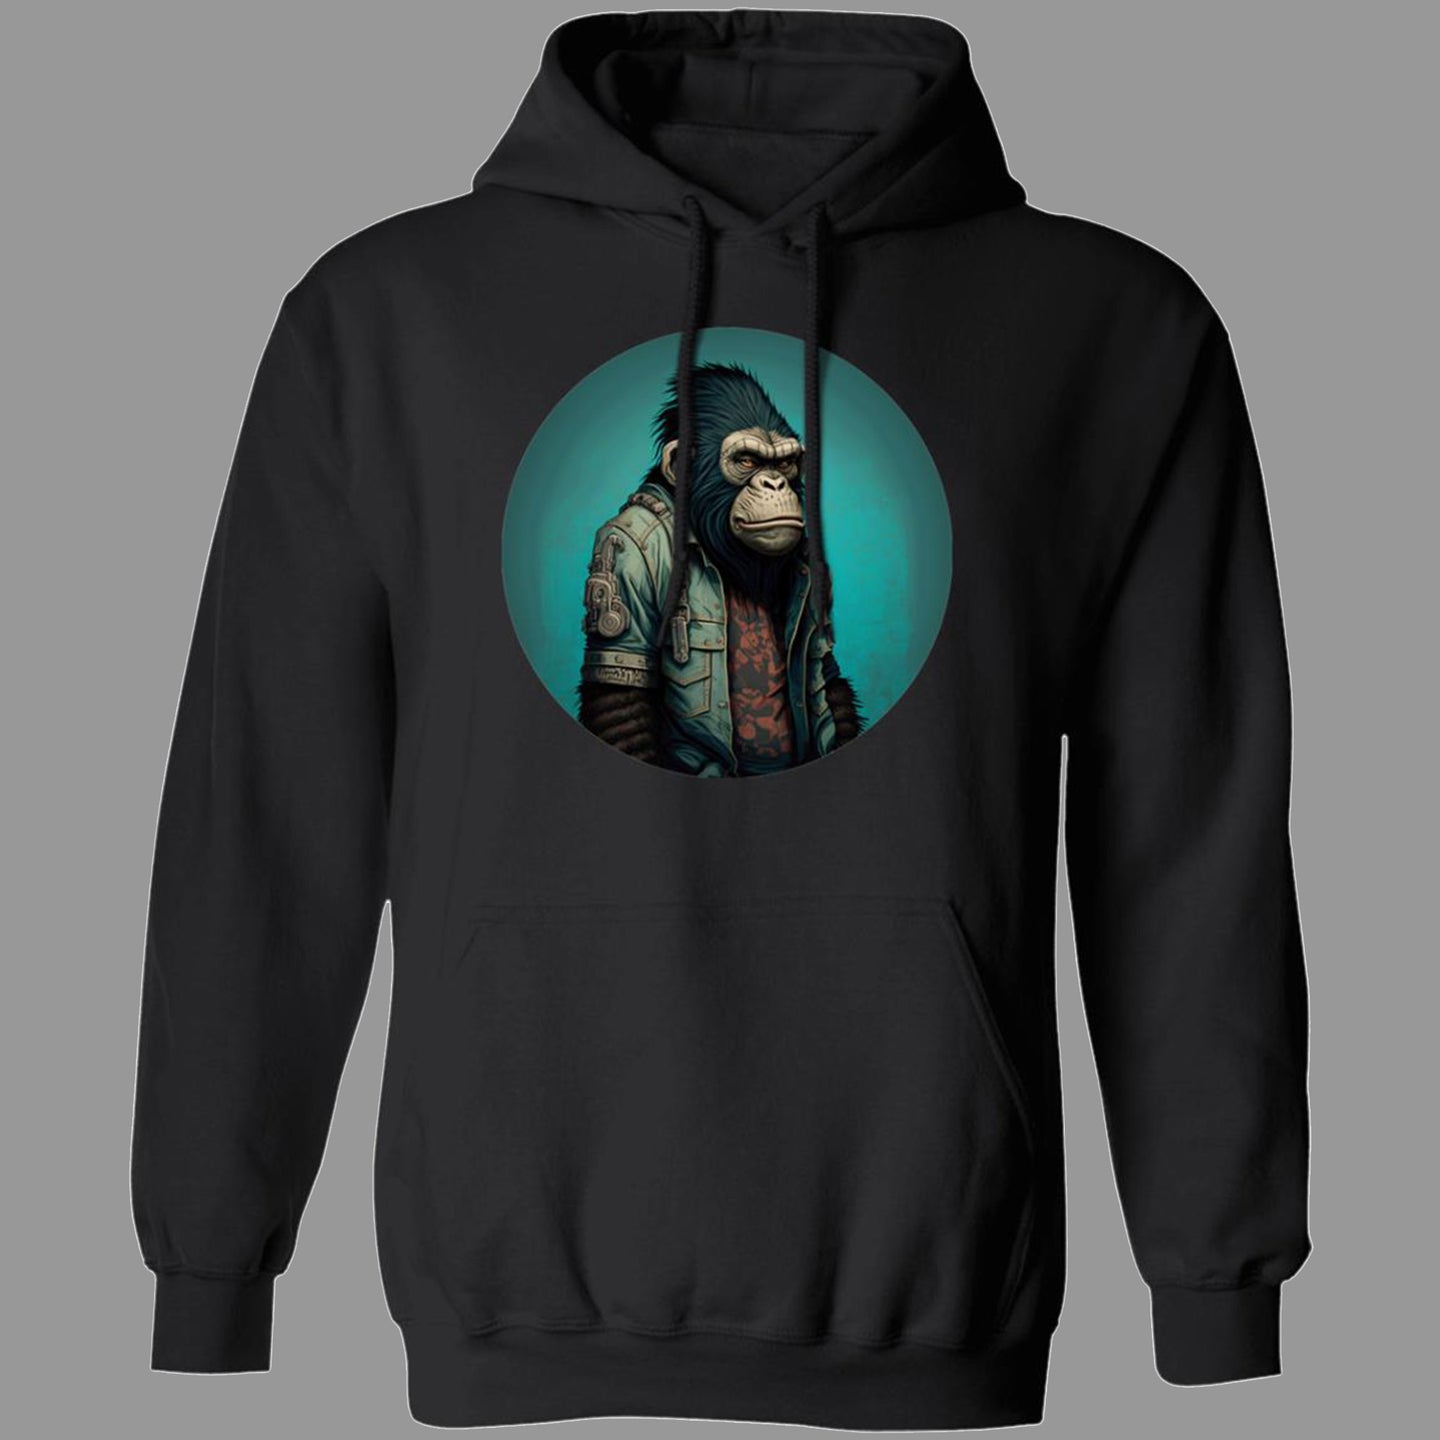 Slacker Ape Alpha Pullover Hoodies & Sweatshirts